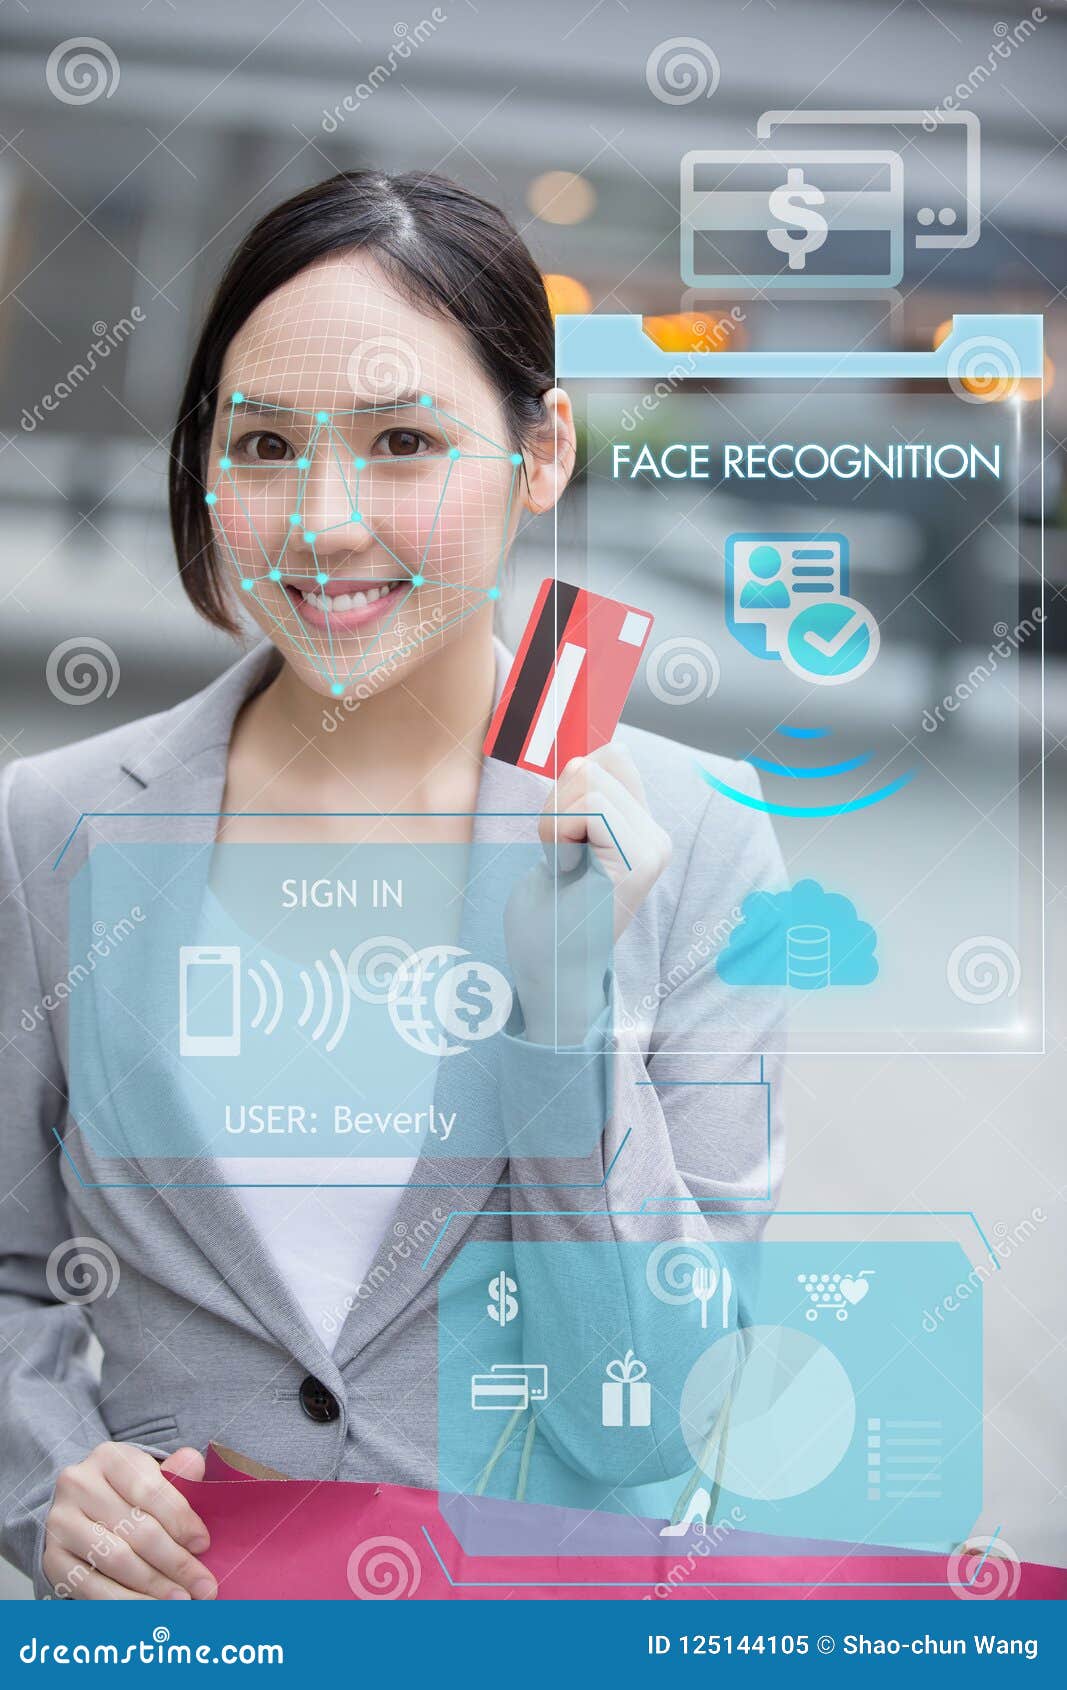 credit facial recognition